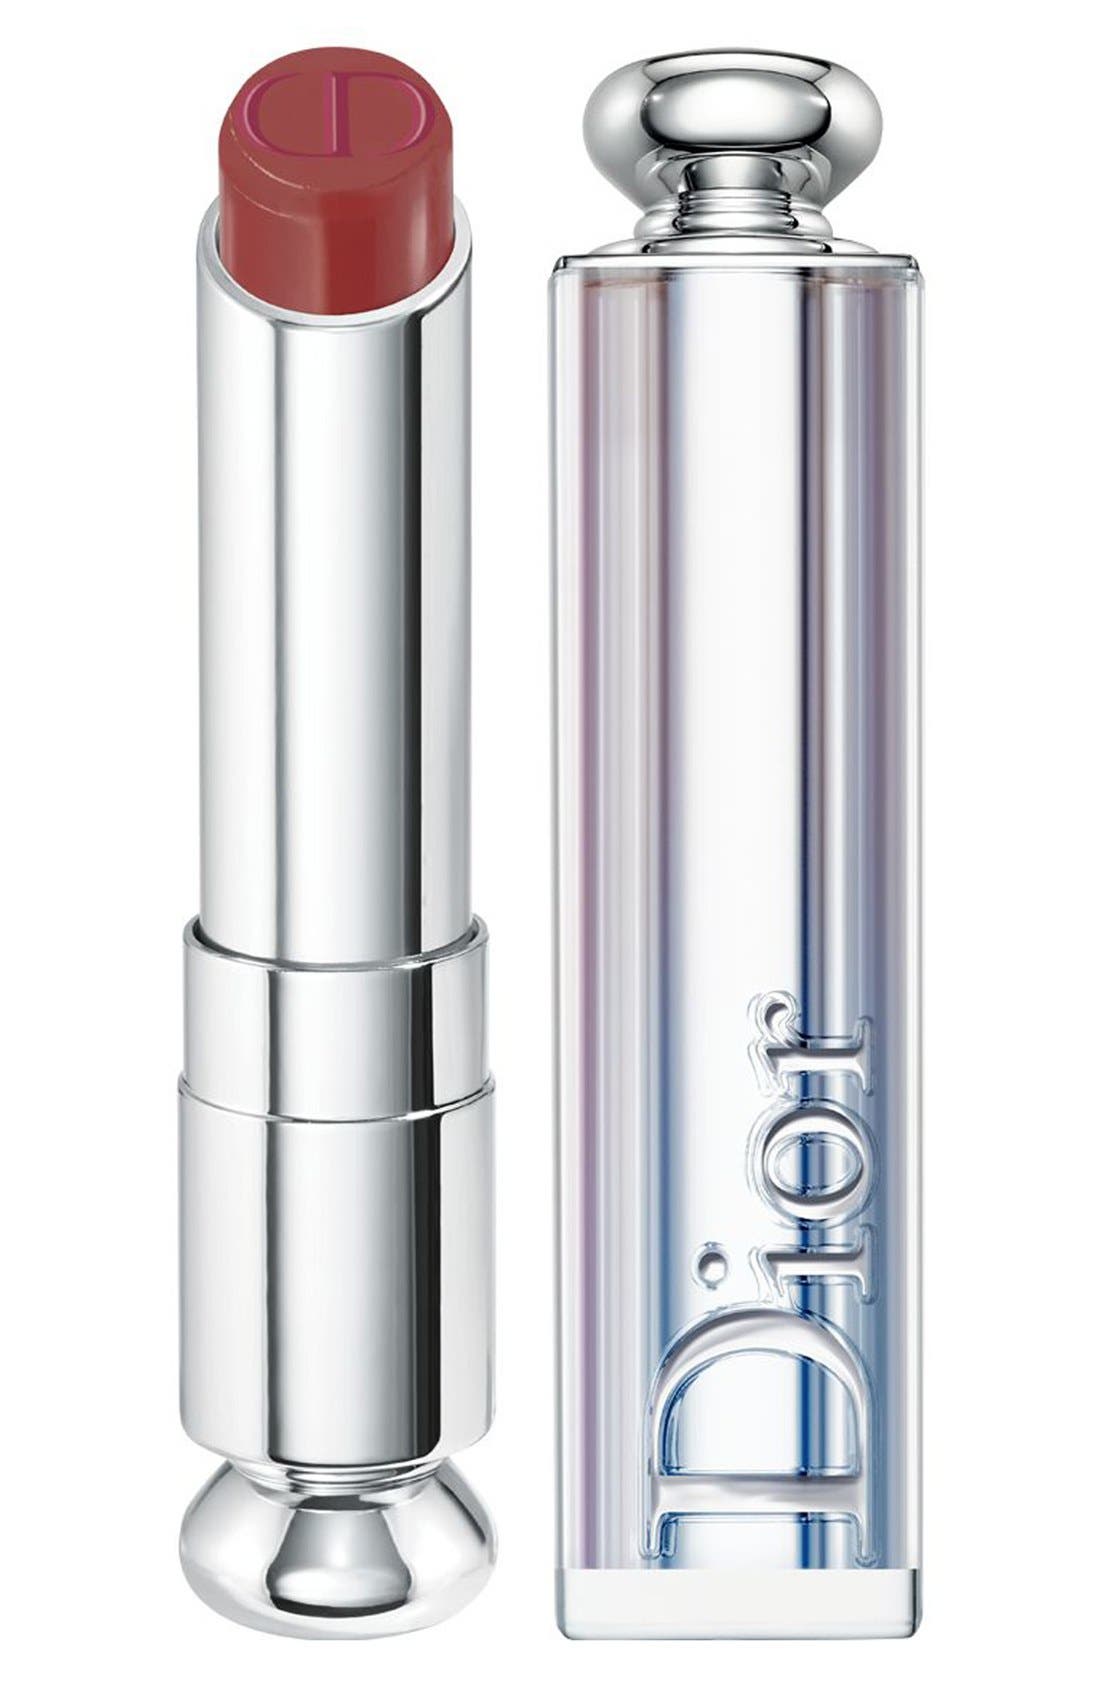 dior addict lipstick 623 not shy